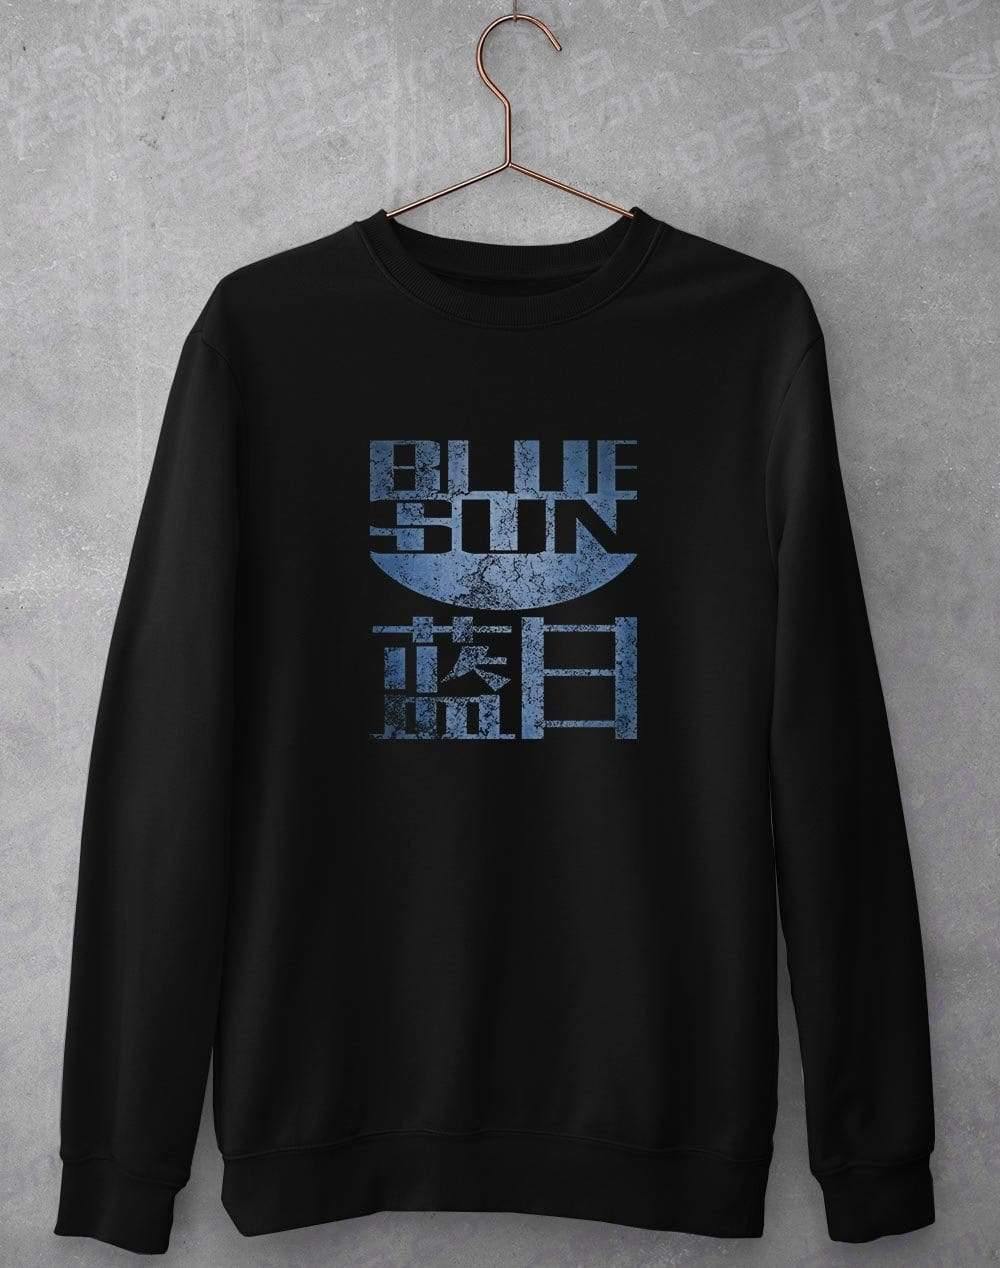 Blue Sun Sweatshirt S / Black  - Off World Tees